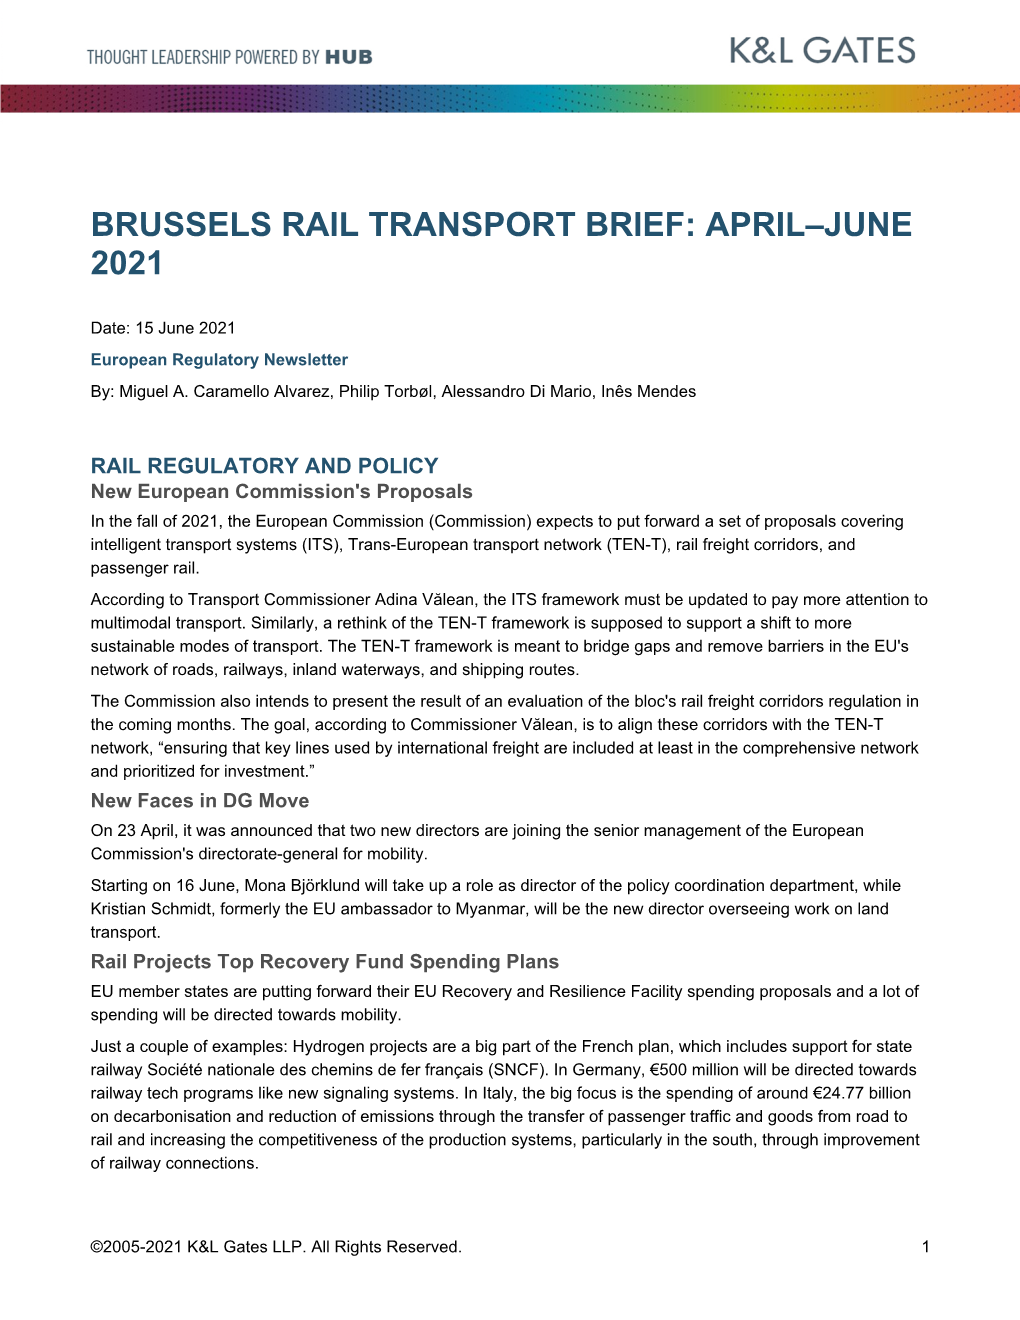 Brussels Rail Transport Brief: April–June 2021